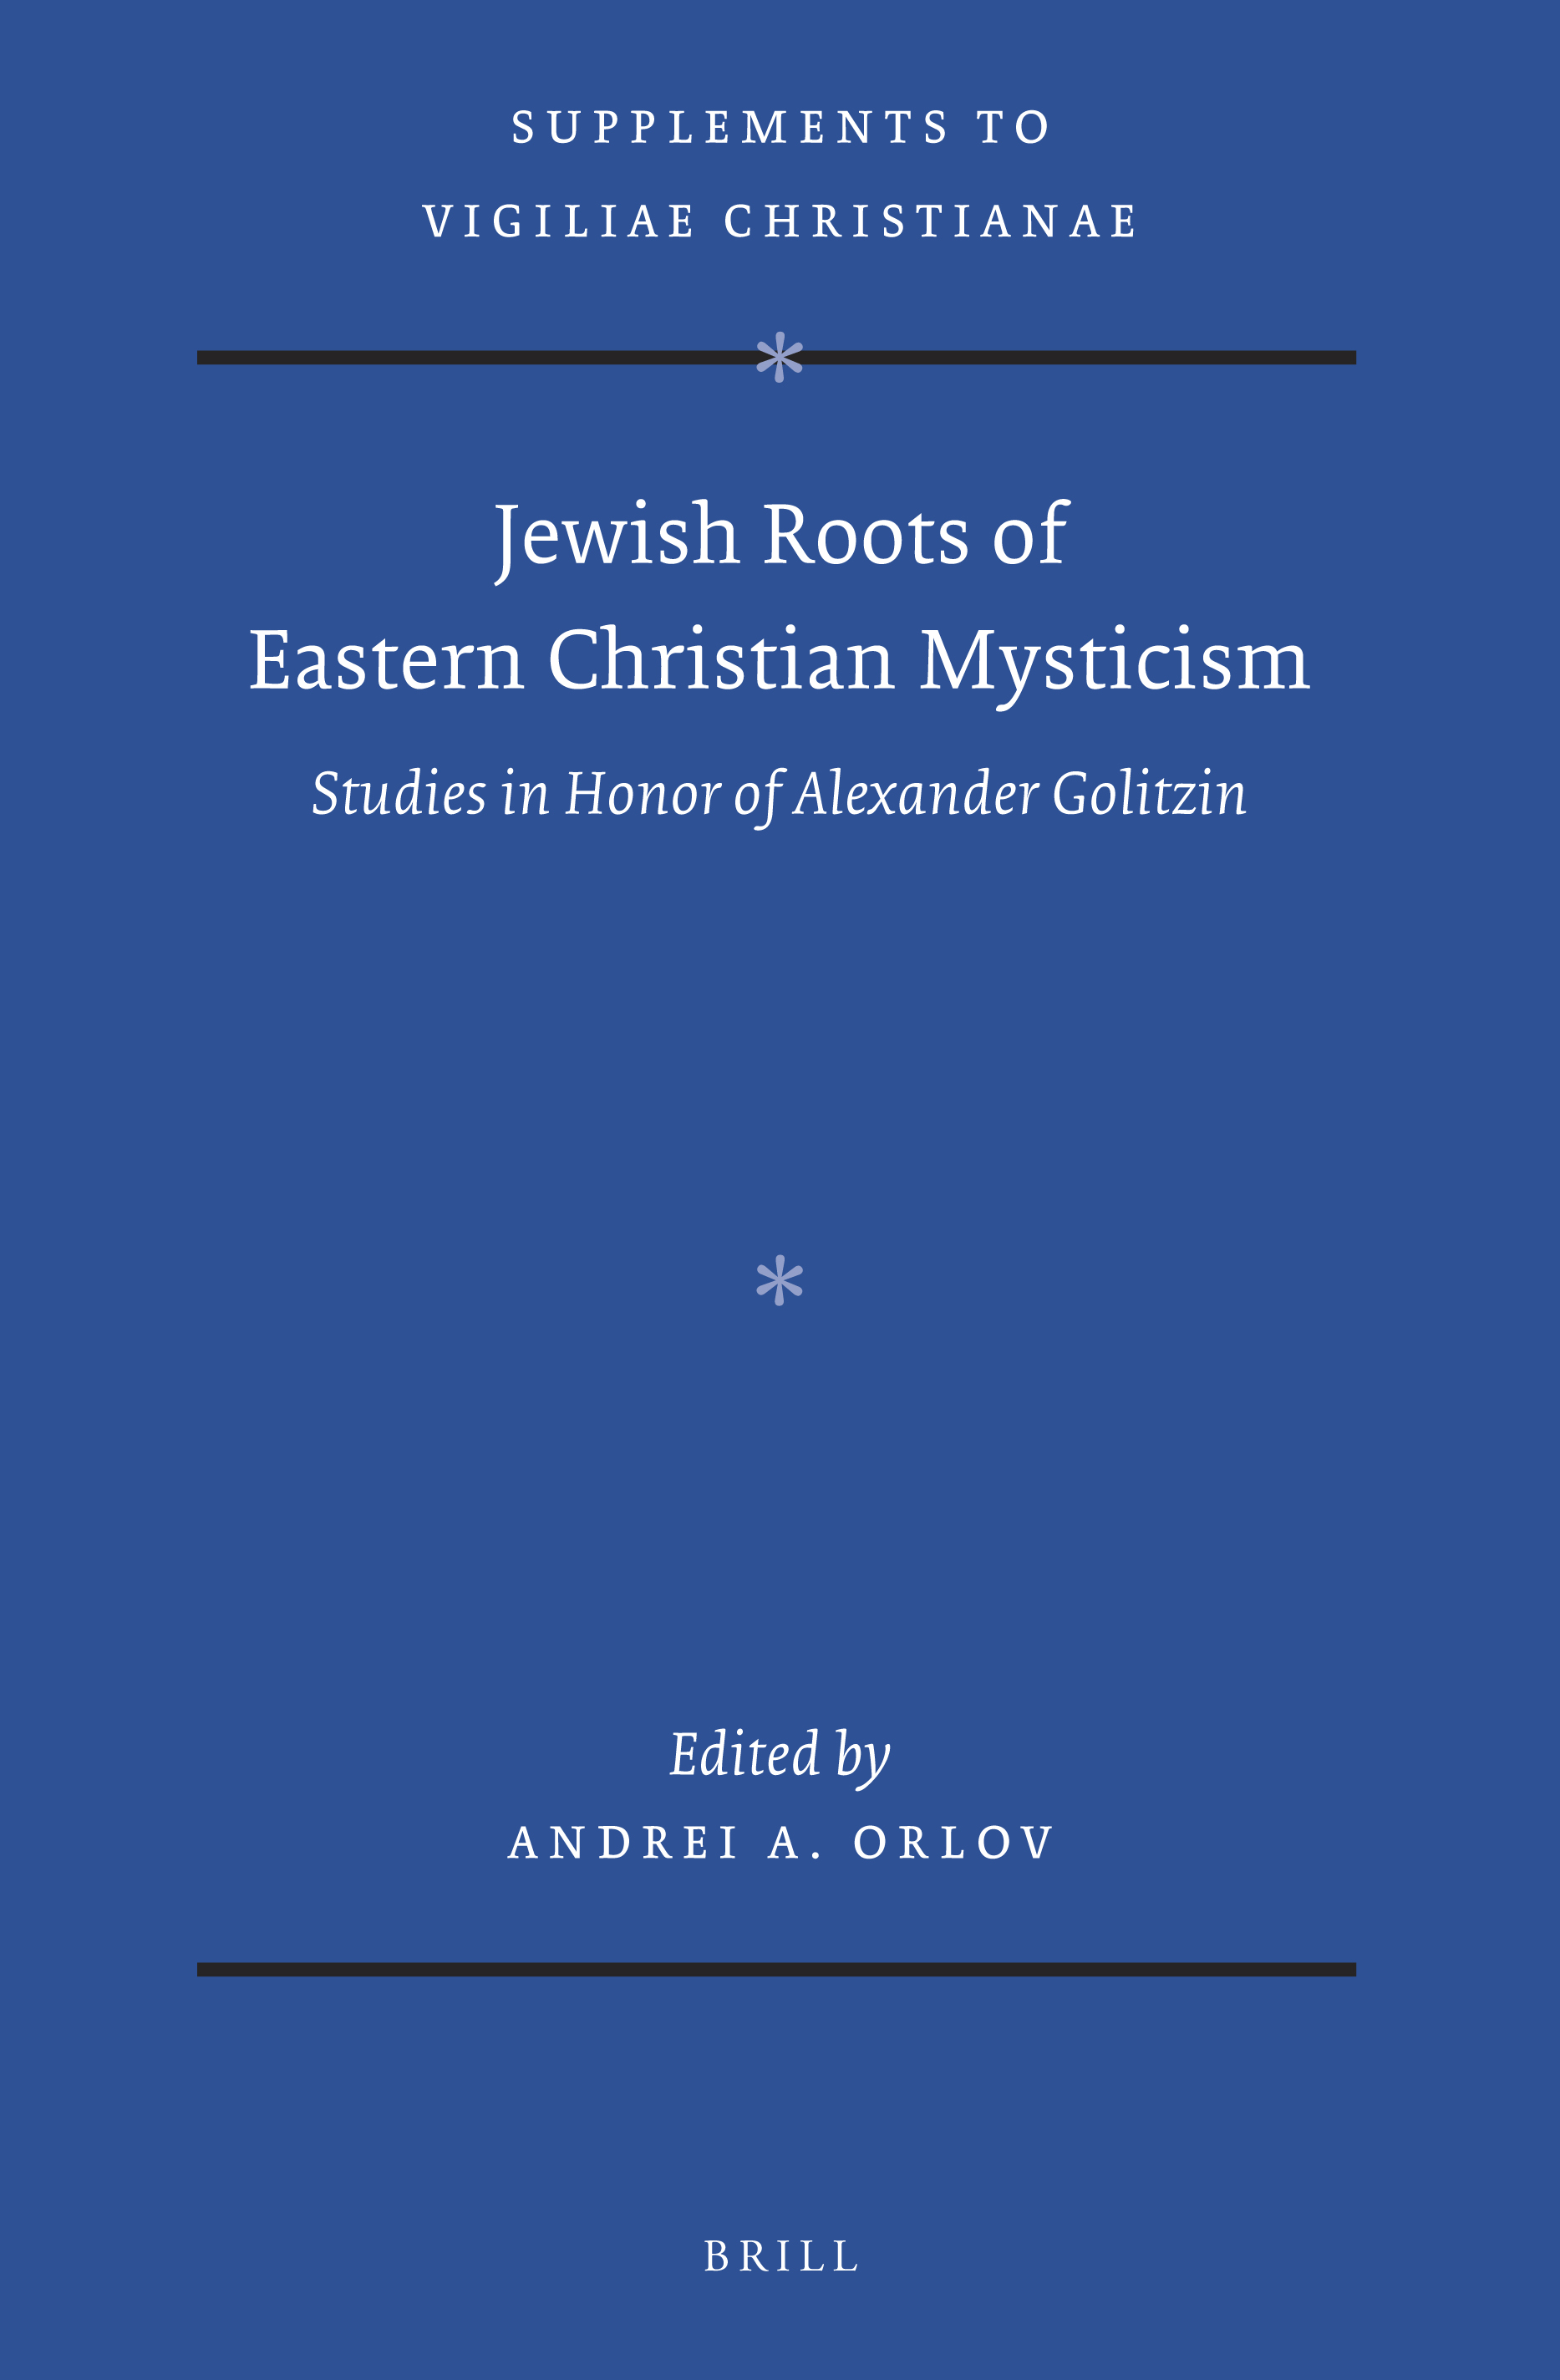 JEWISH ROOTS OF EASTERN CHRISTIAN MYSTICISM. STUDIES IN HONOR OF ALEXANDER GOLITZIN